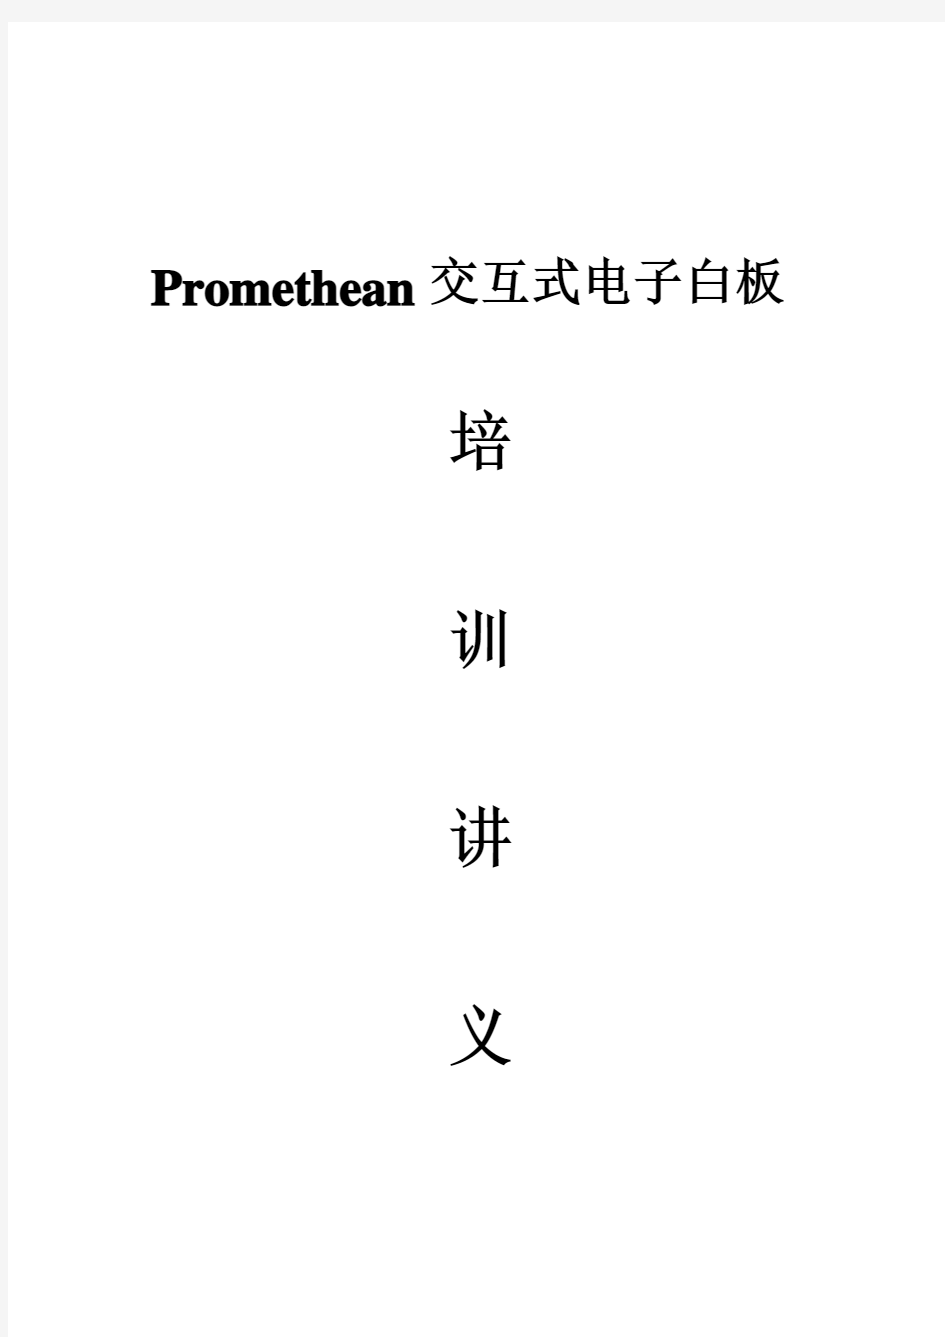 Promethean交互式电子白板使用手册